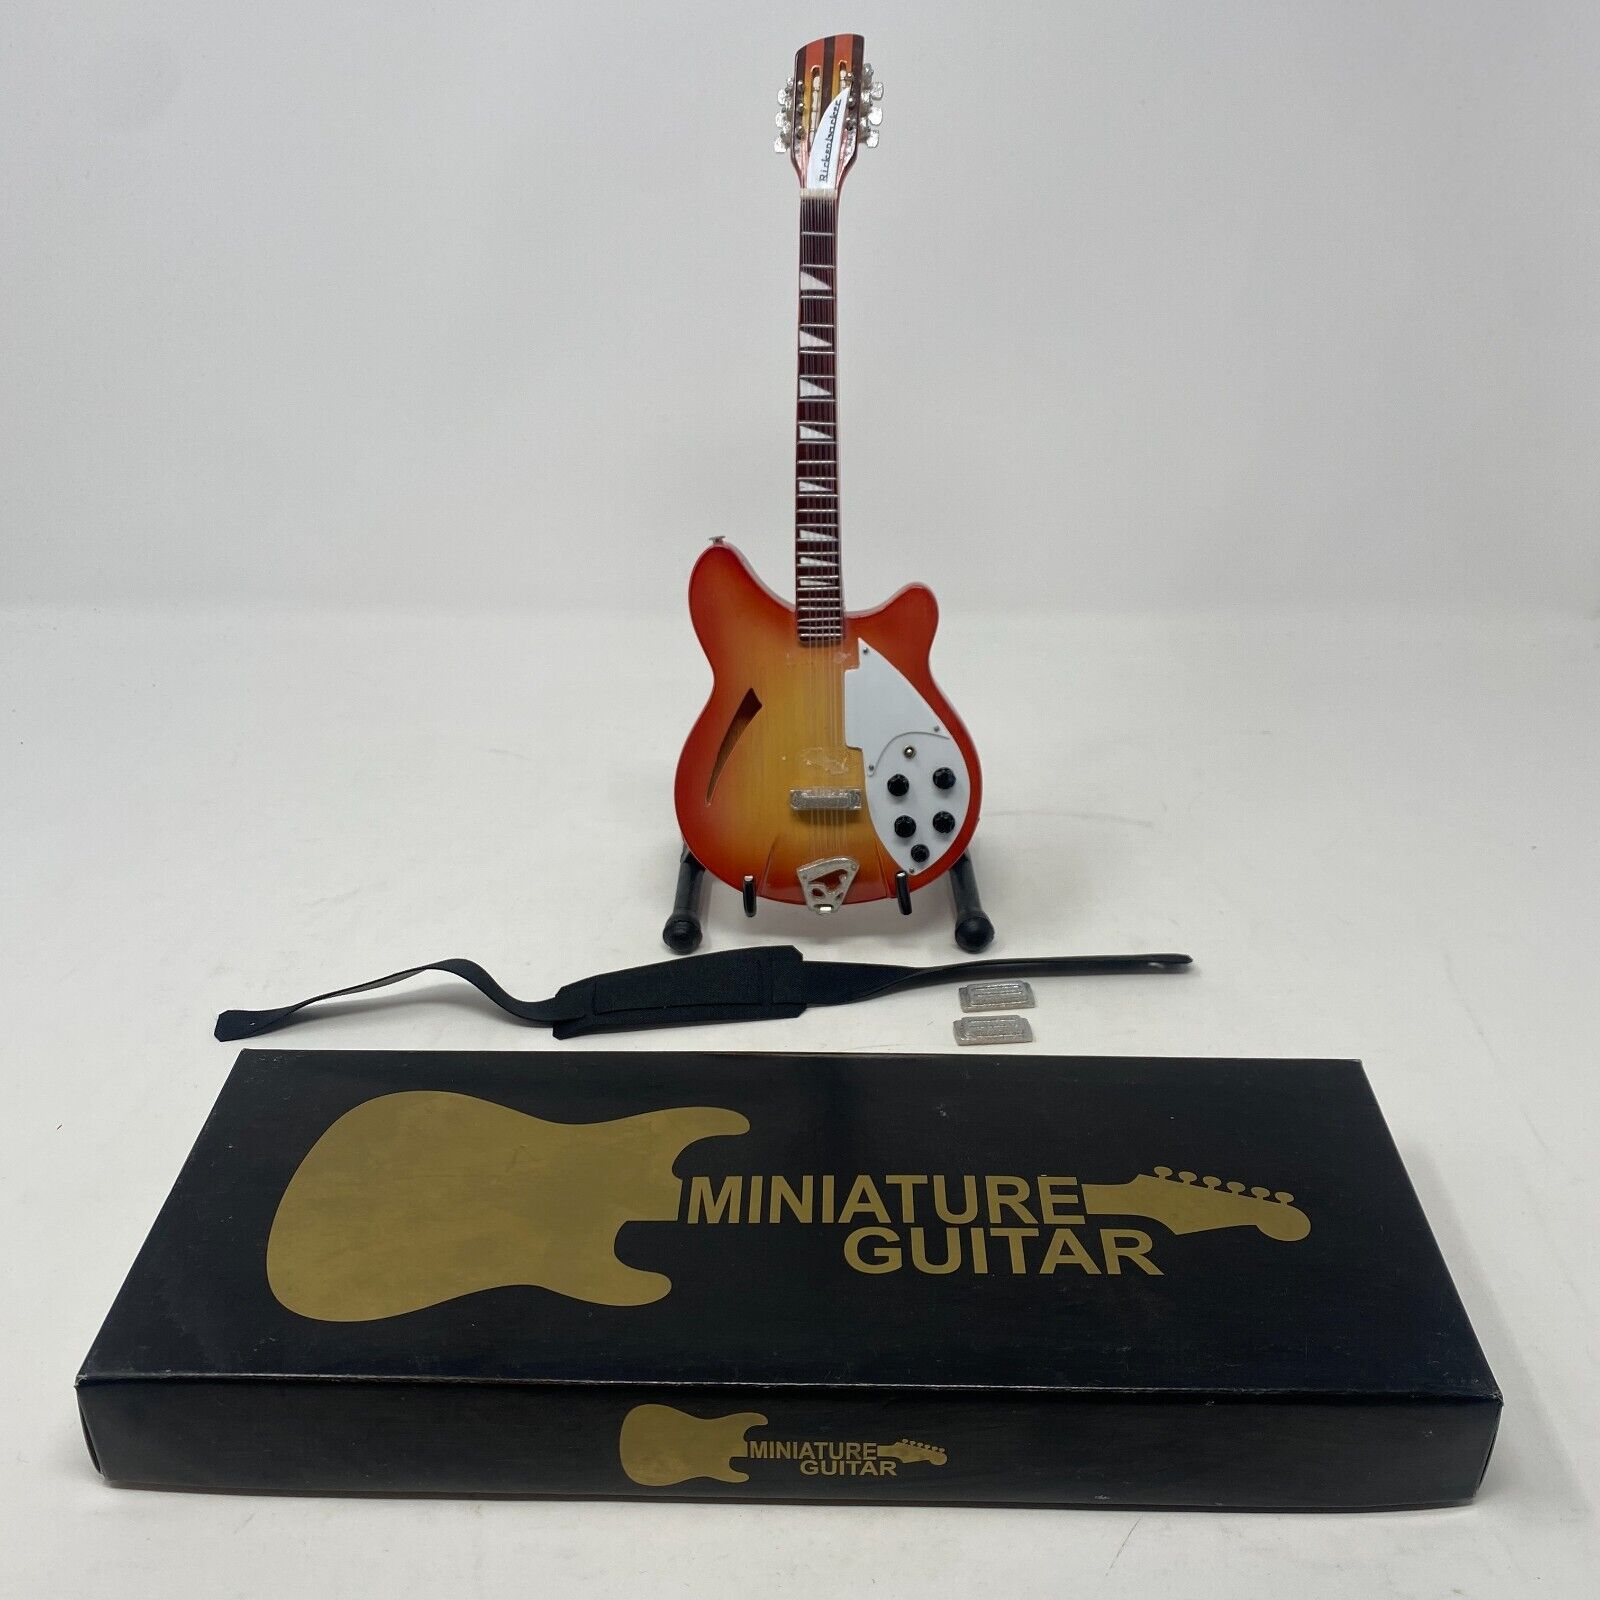 MINOR DAMAGE Miniature Sunburst Guitar TOM PETTY Display GIFT Memorabilia